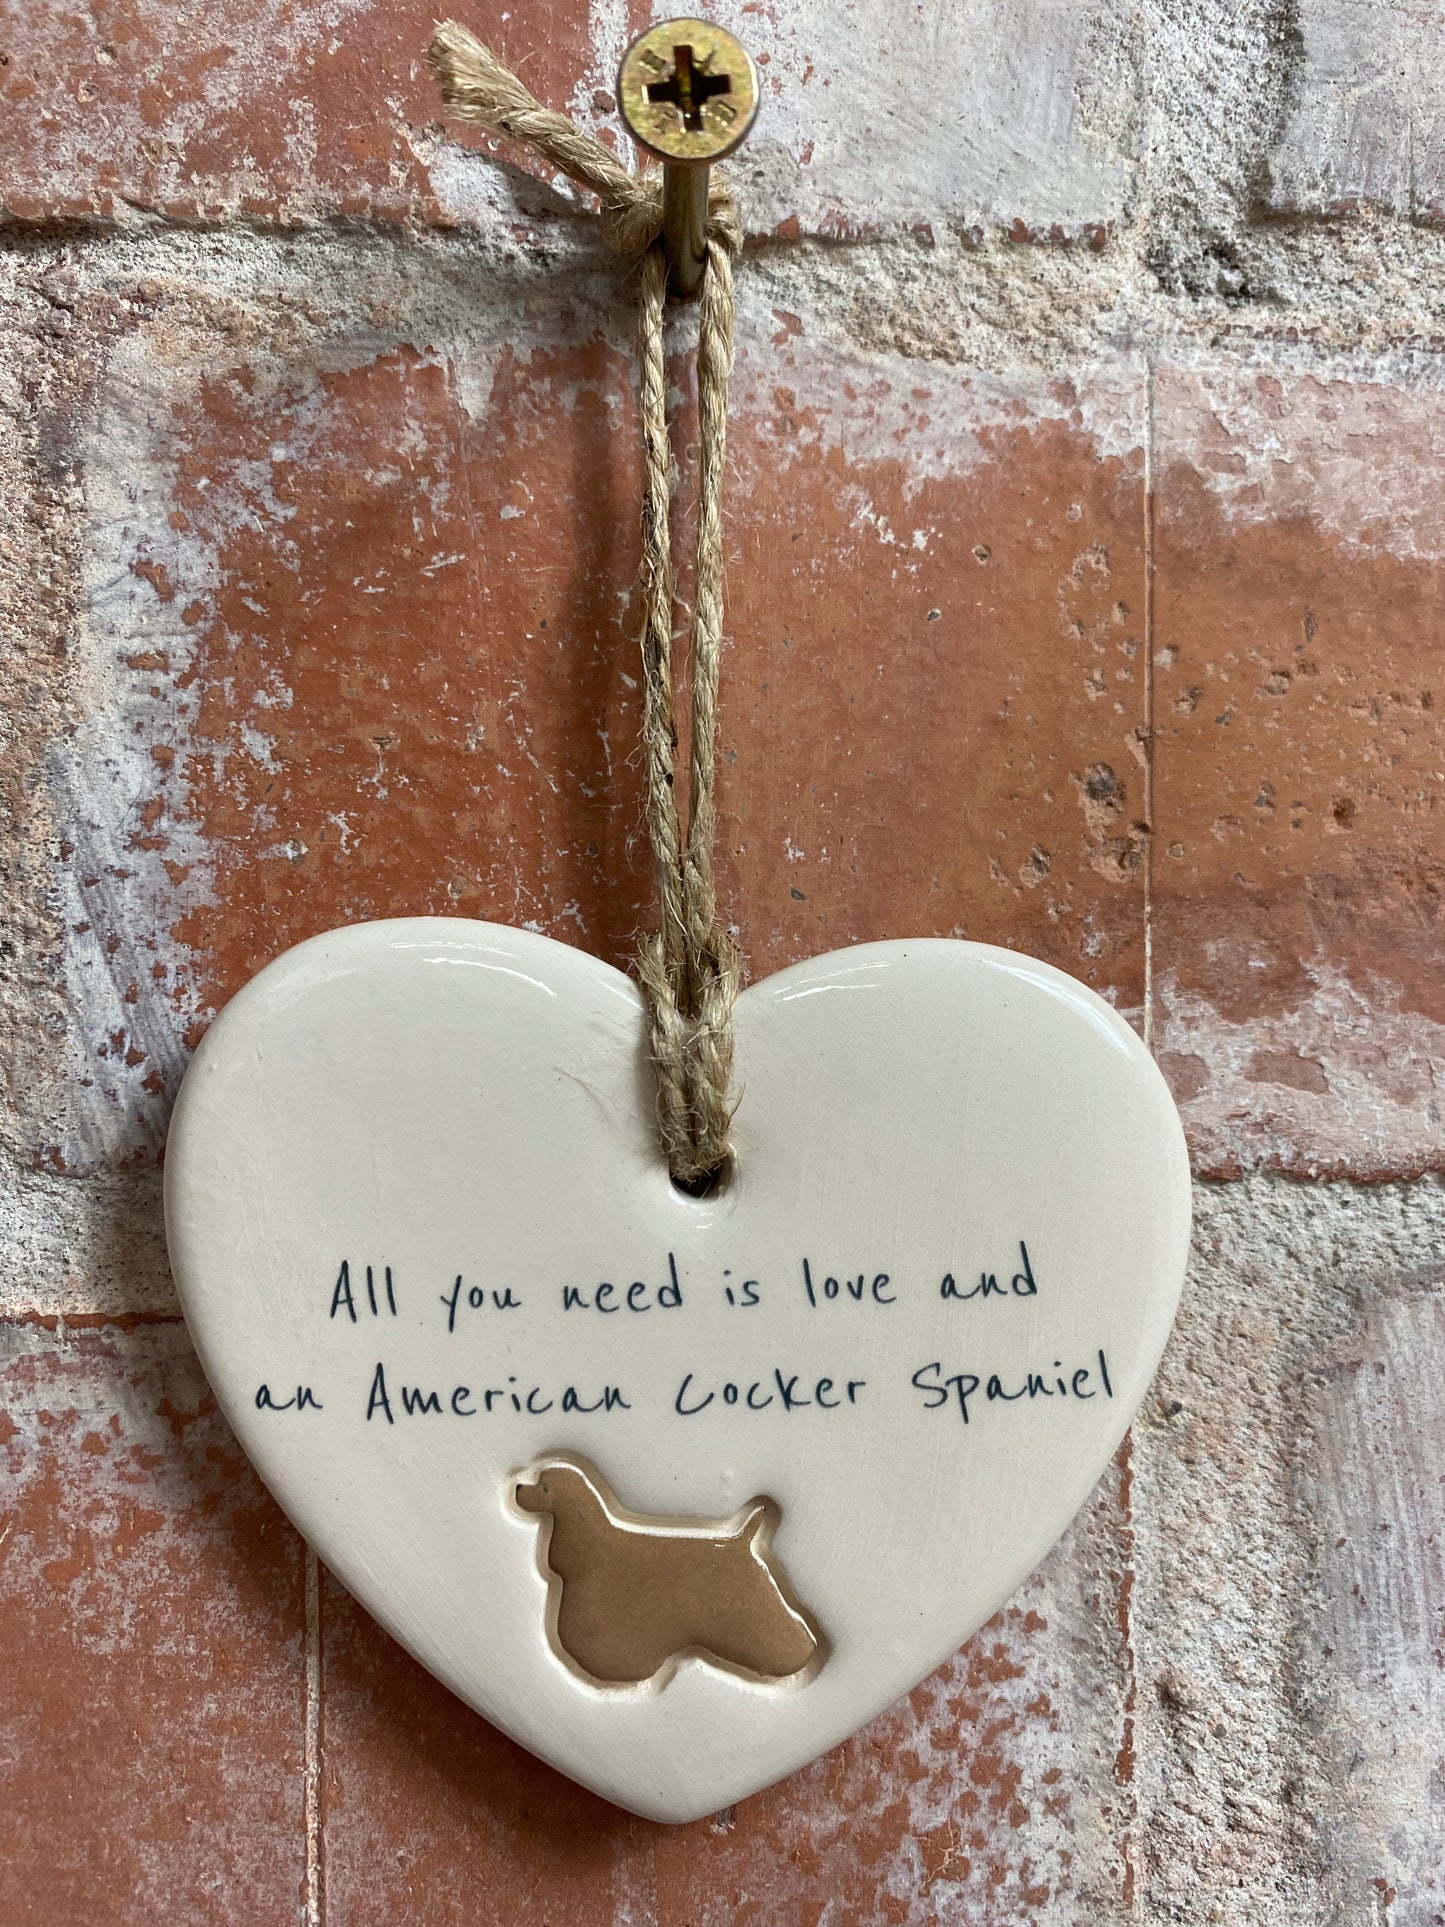 American Cocker Spaniel ceramic heart